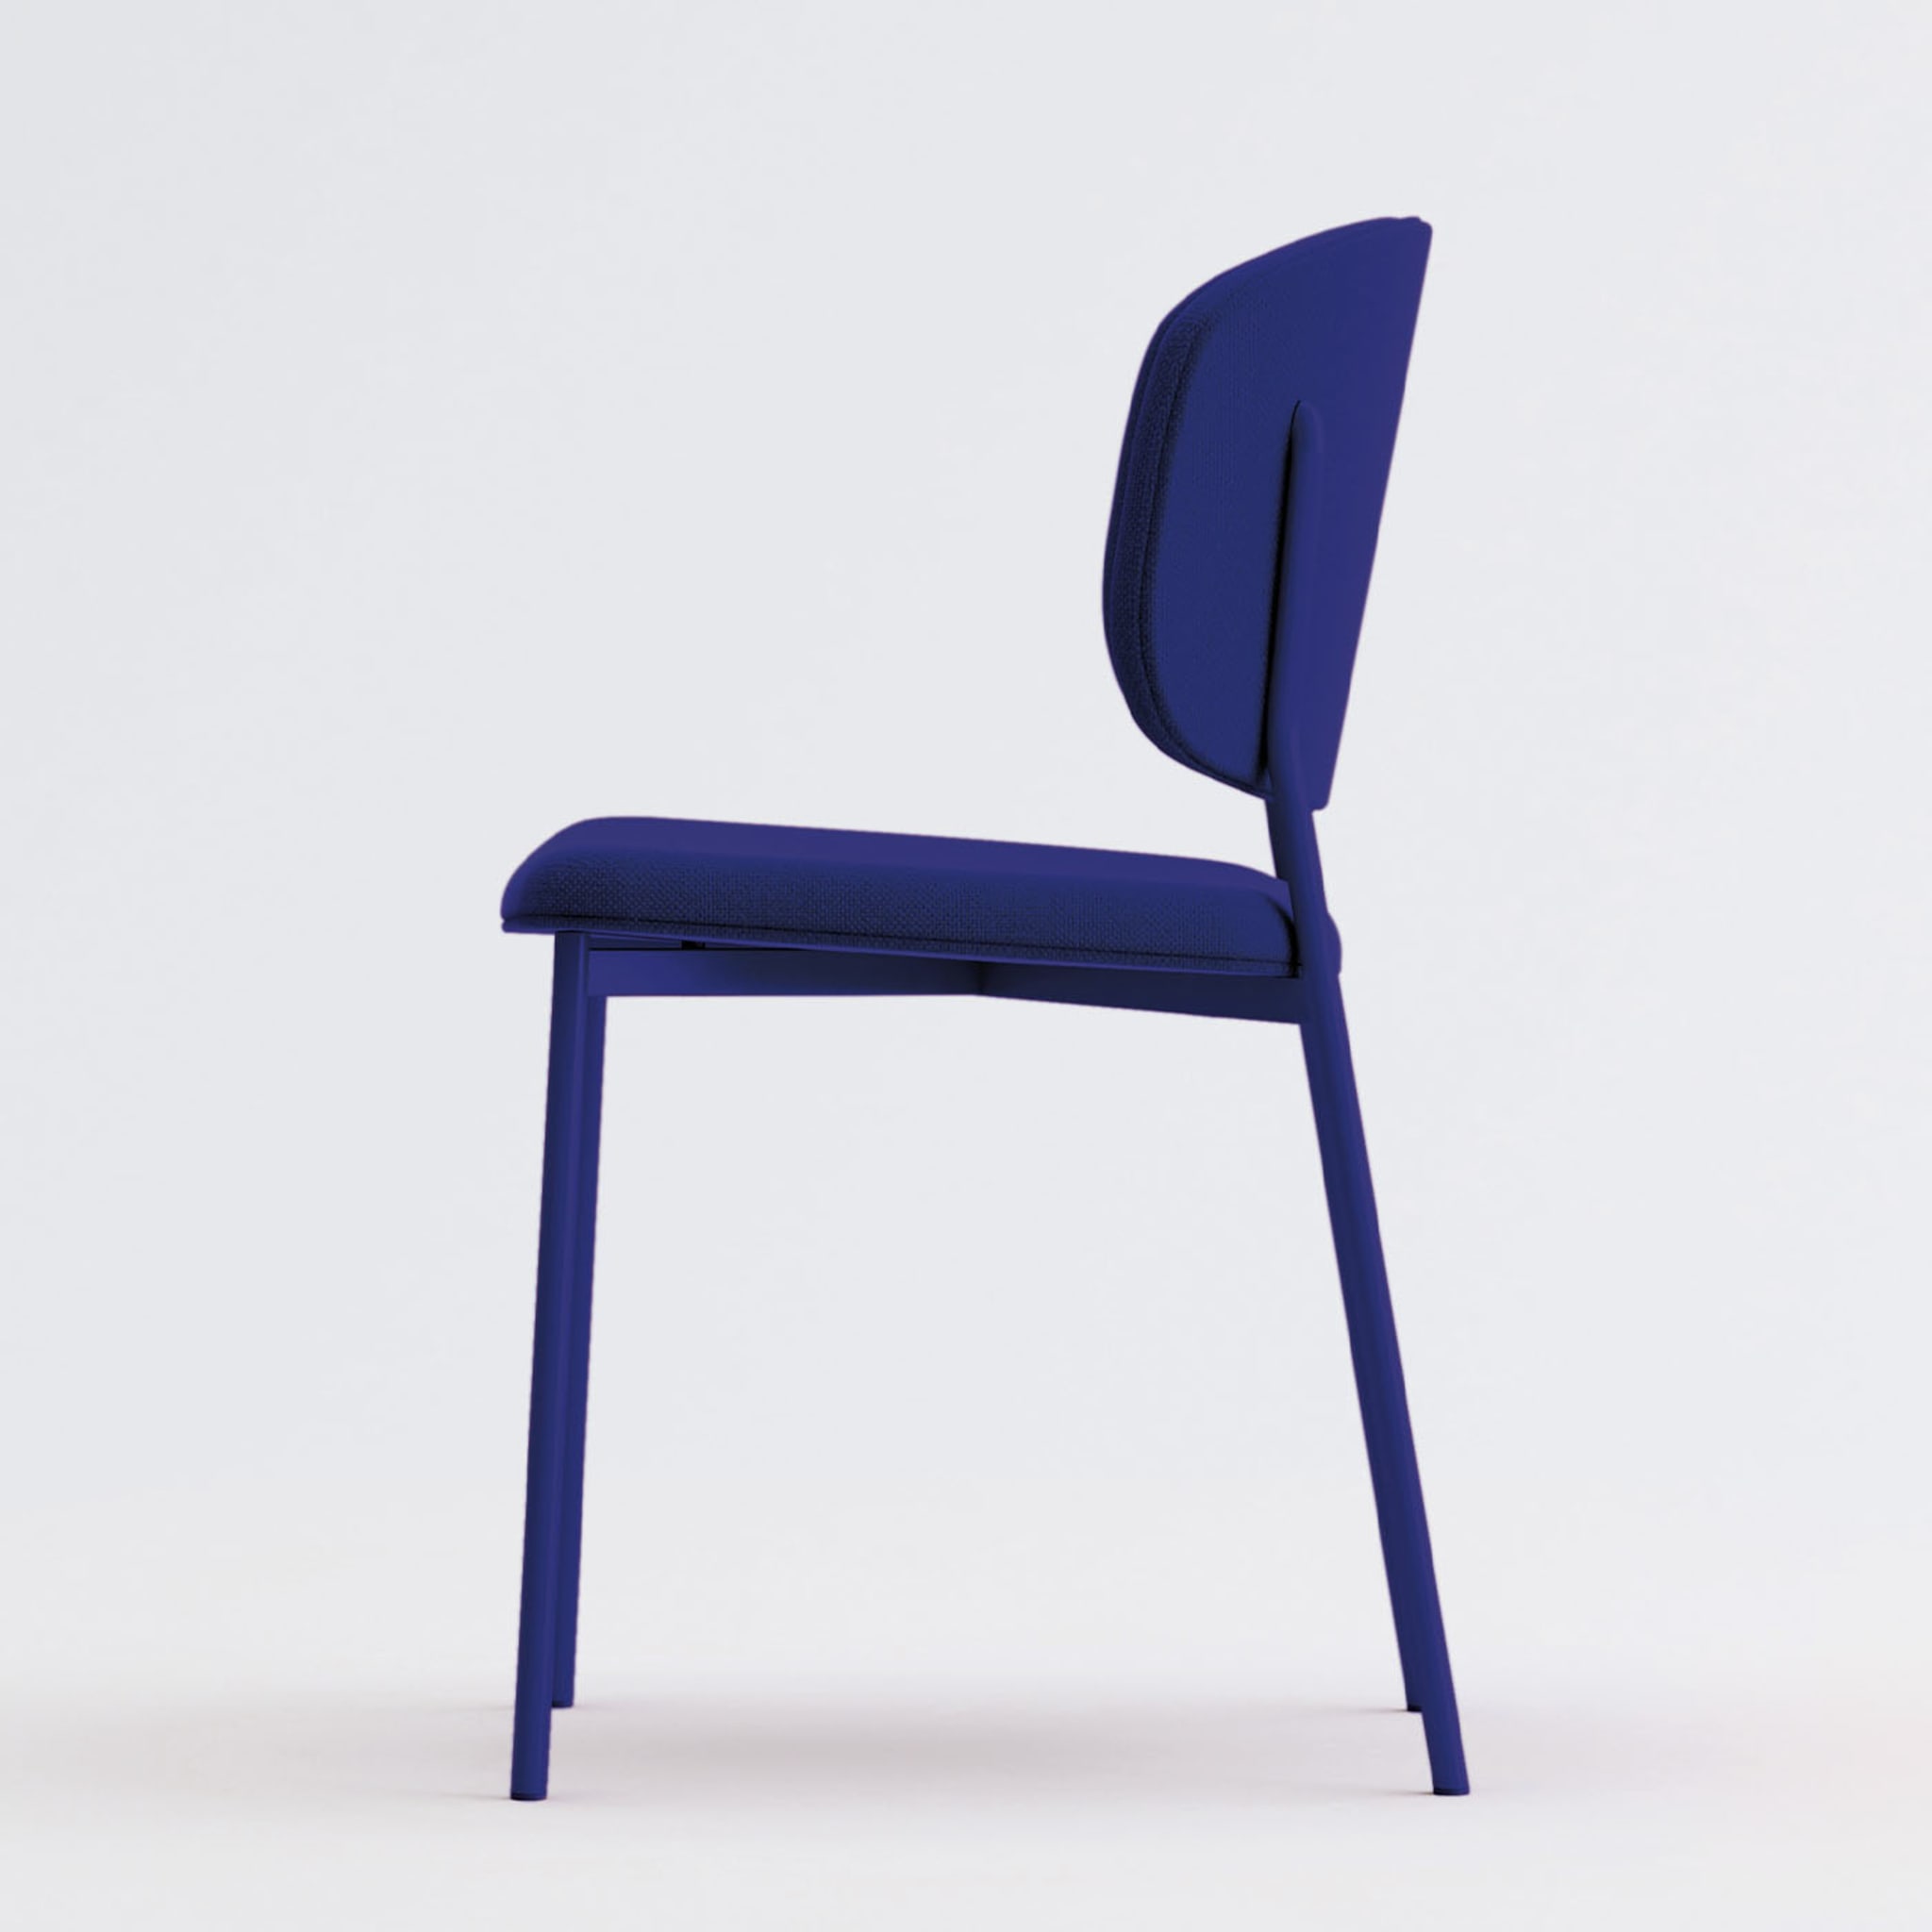 Wround Blue Chair by Copiosa Lab - Alternative view 1